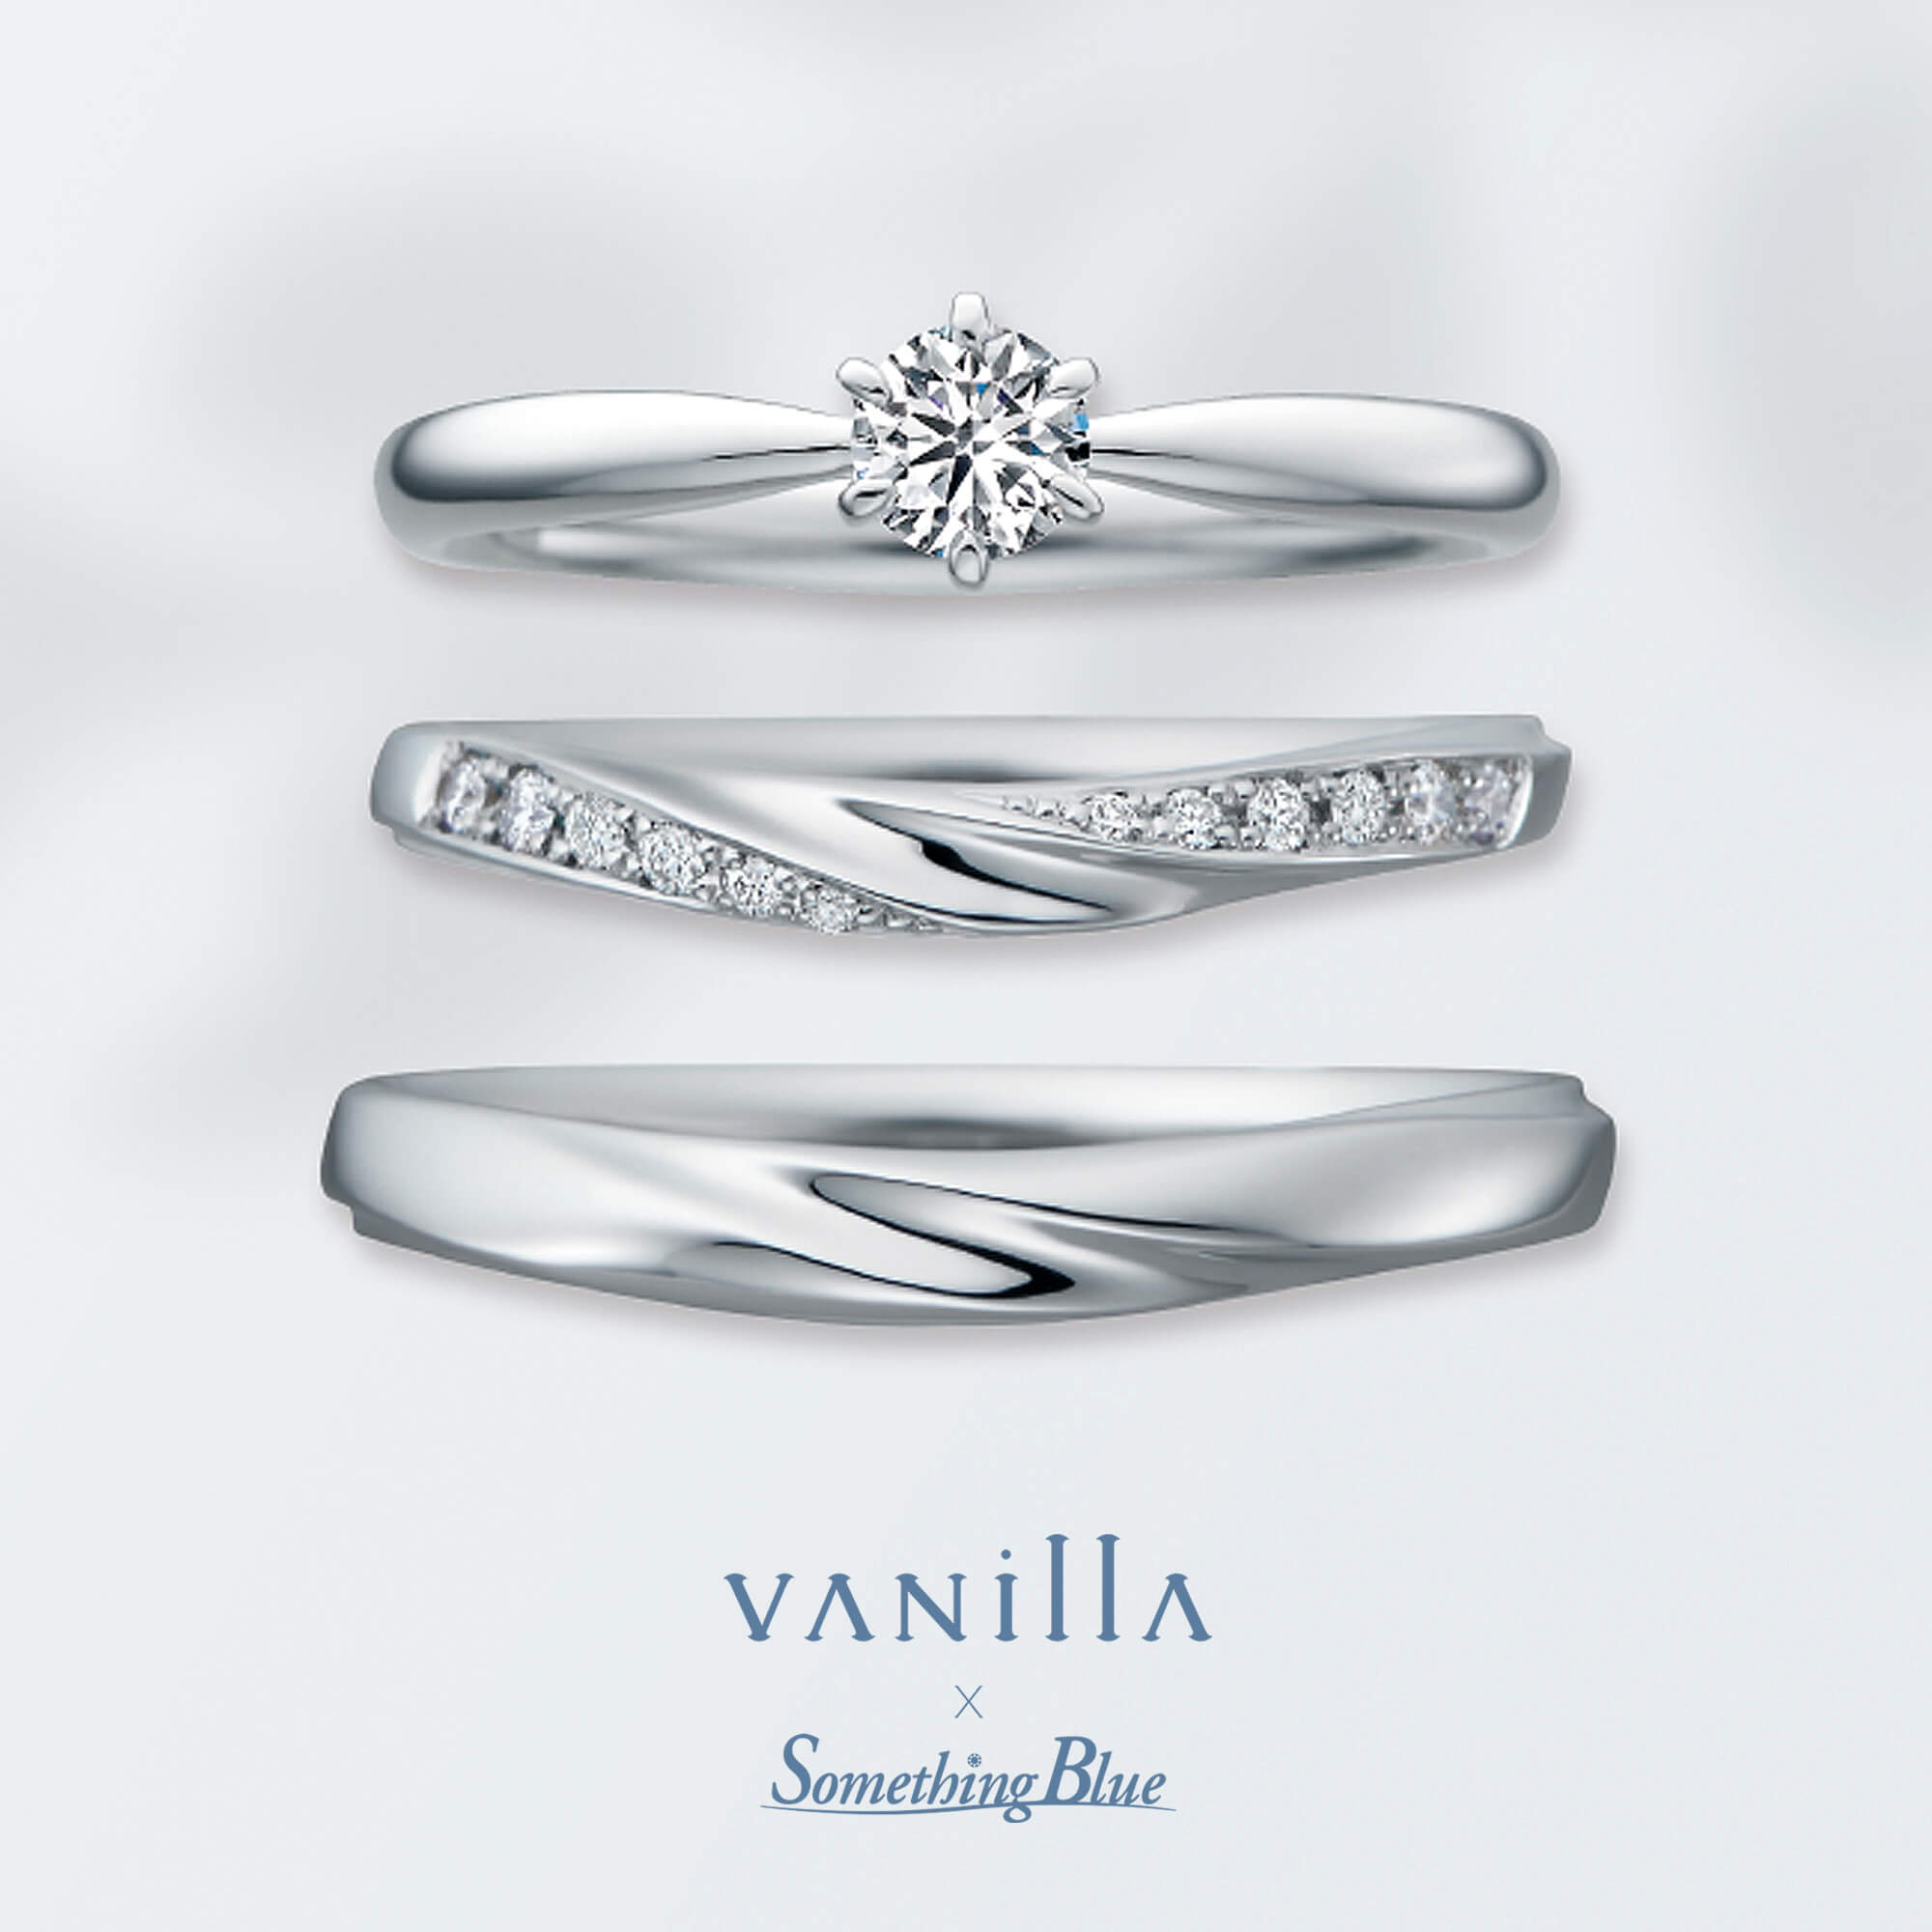 VANillA×SomethingBlueヴァニラ×サムシングブルーの婚約指輪エンゲージリングEngagementringと結婚指輪マリッジリングMarriageringとセットリングSetringのAlbaRoseアルバローズ